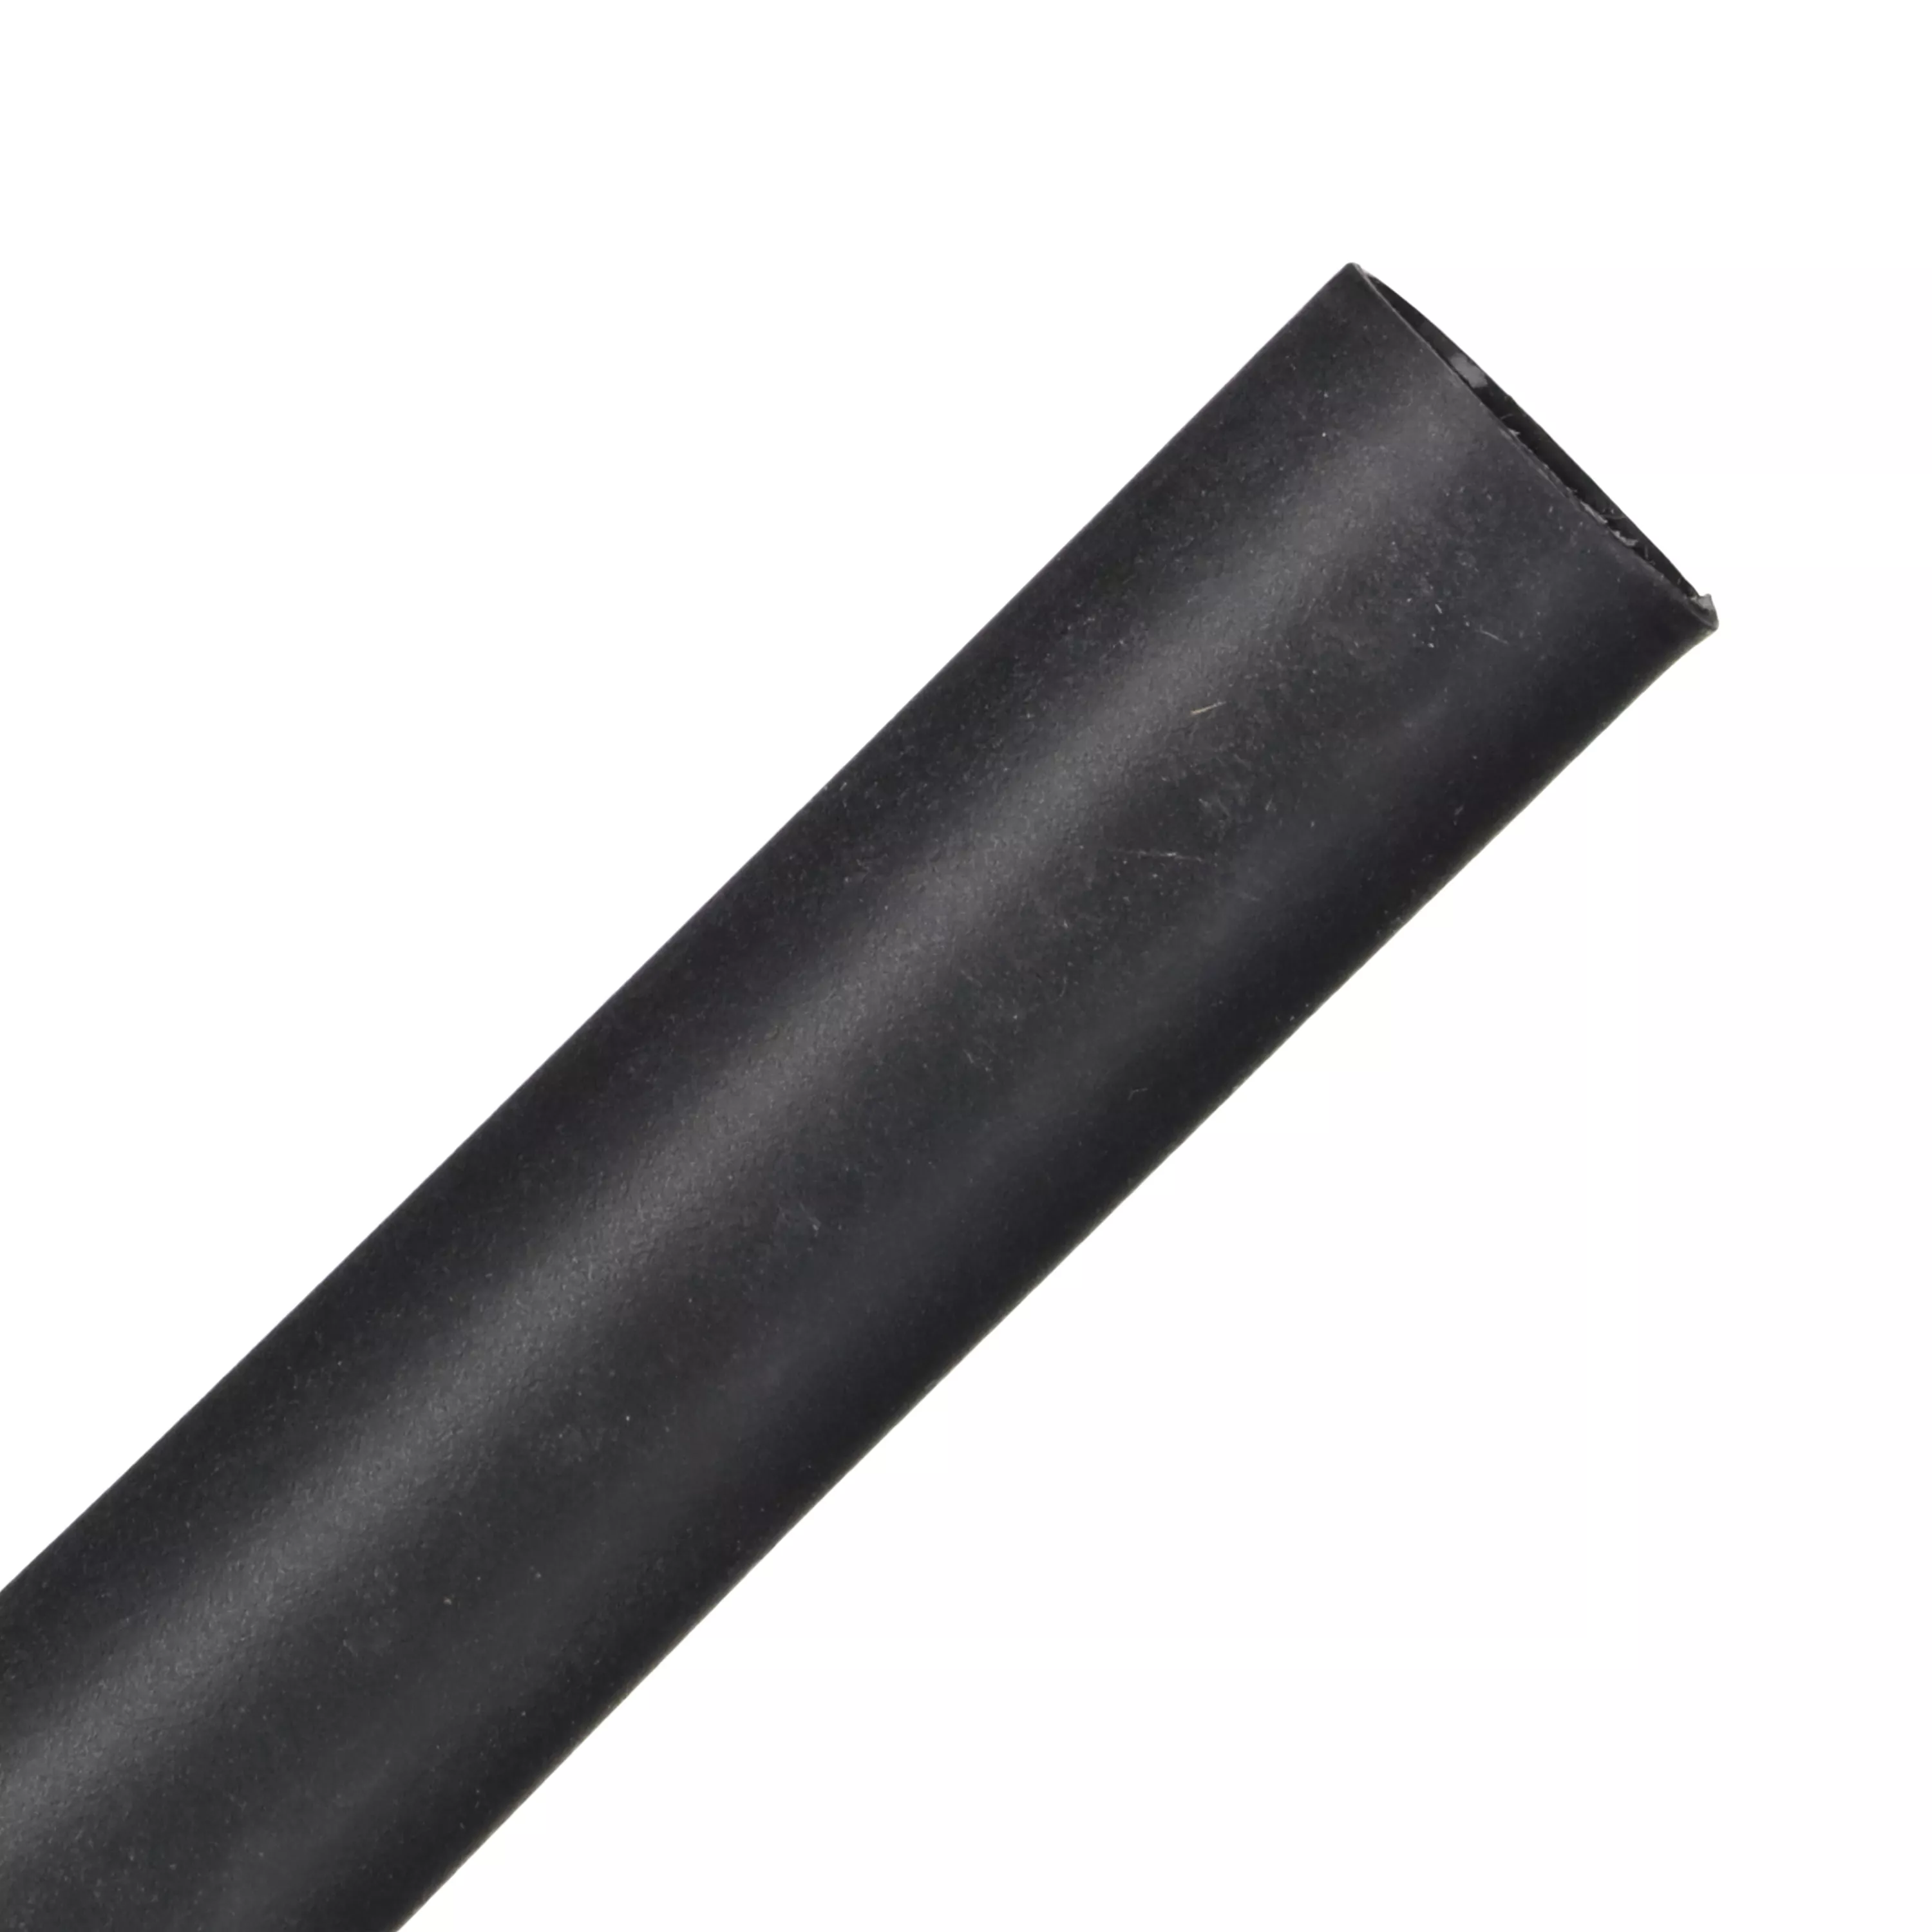 3M™ Thin-Wall Heat Shrink Tubing EPS-300, Adhesive-Lined,
3/8-48